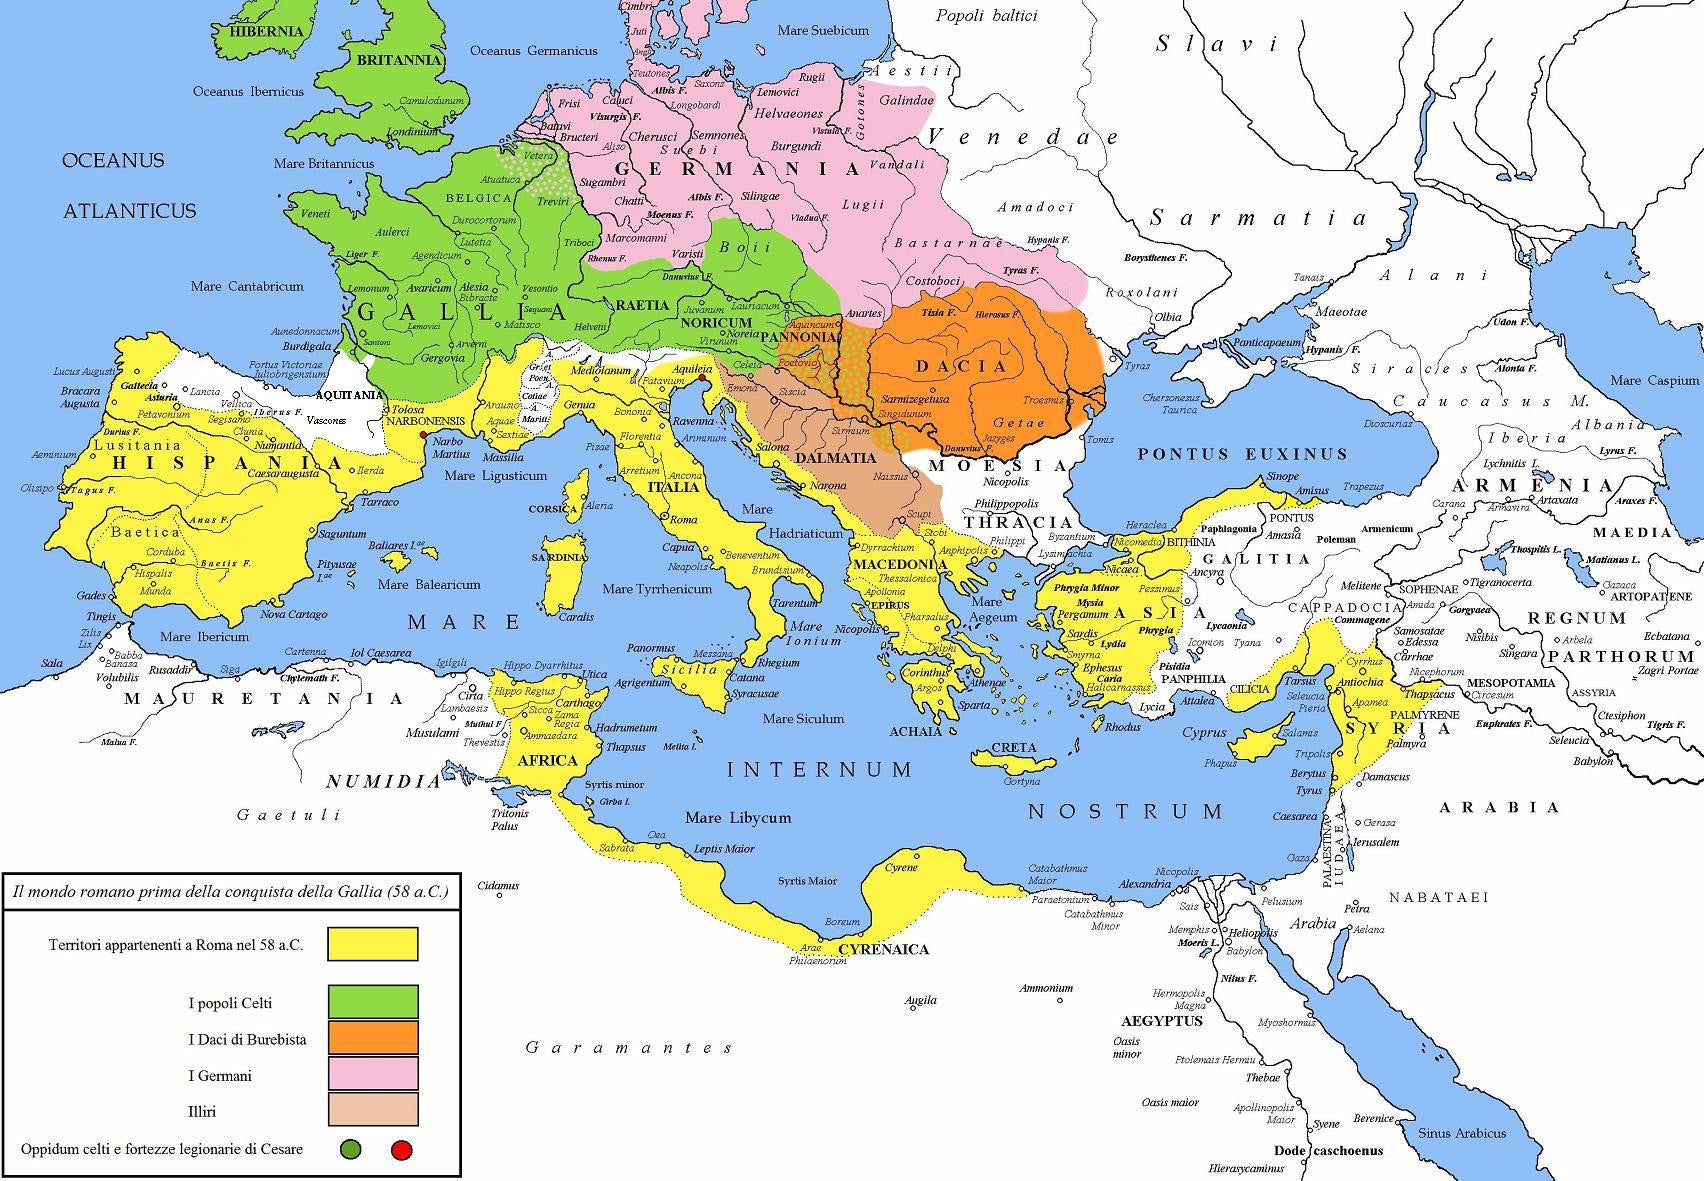 celts romans map gauls italia history caesar vercingetorix